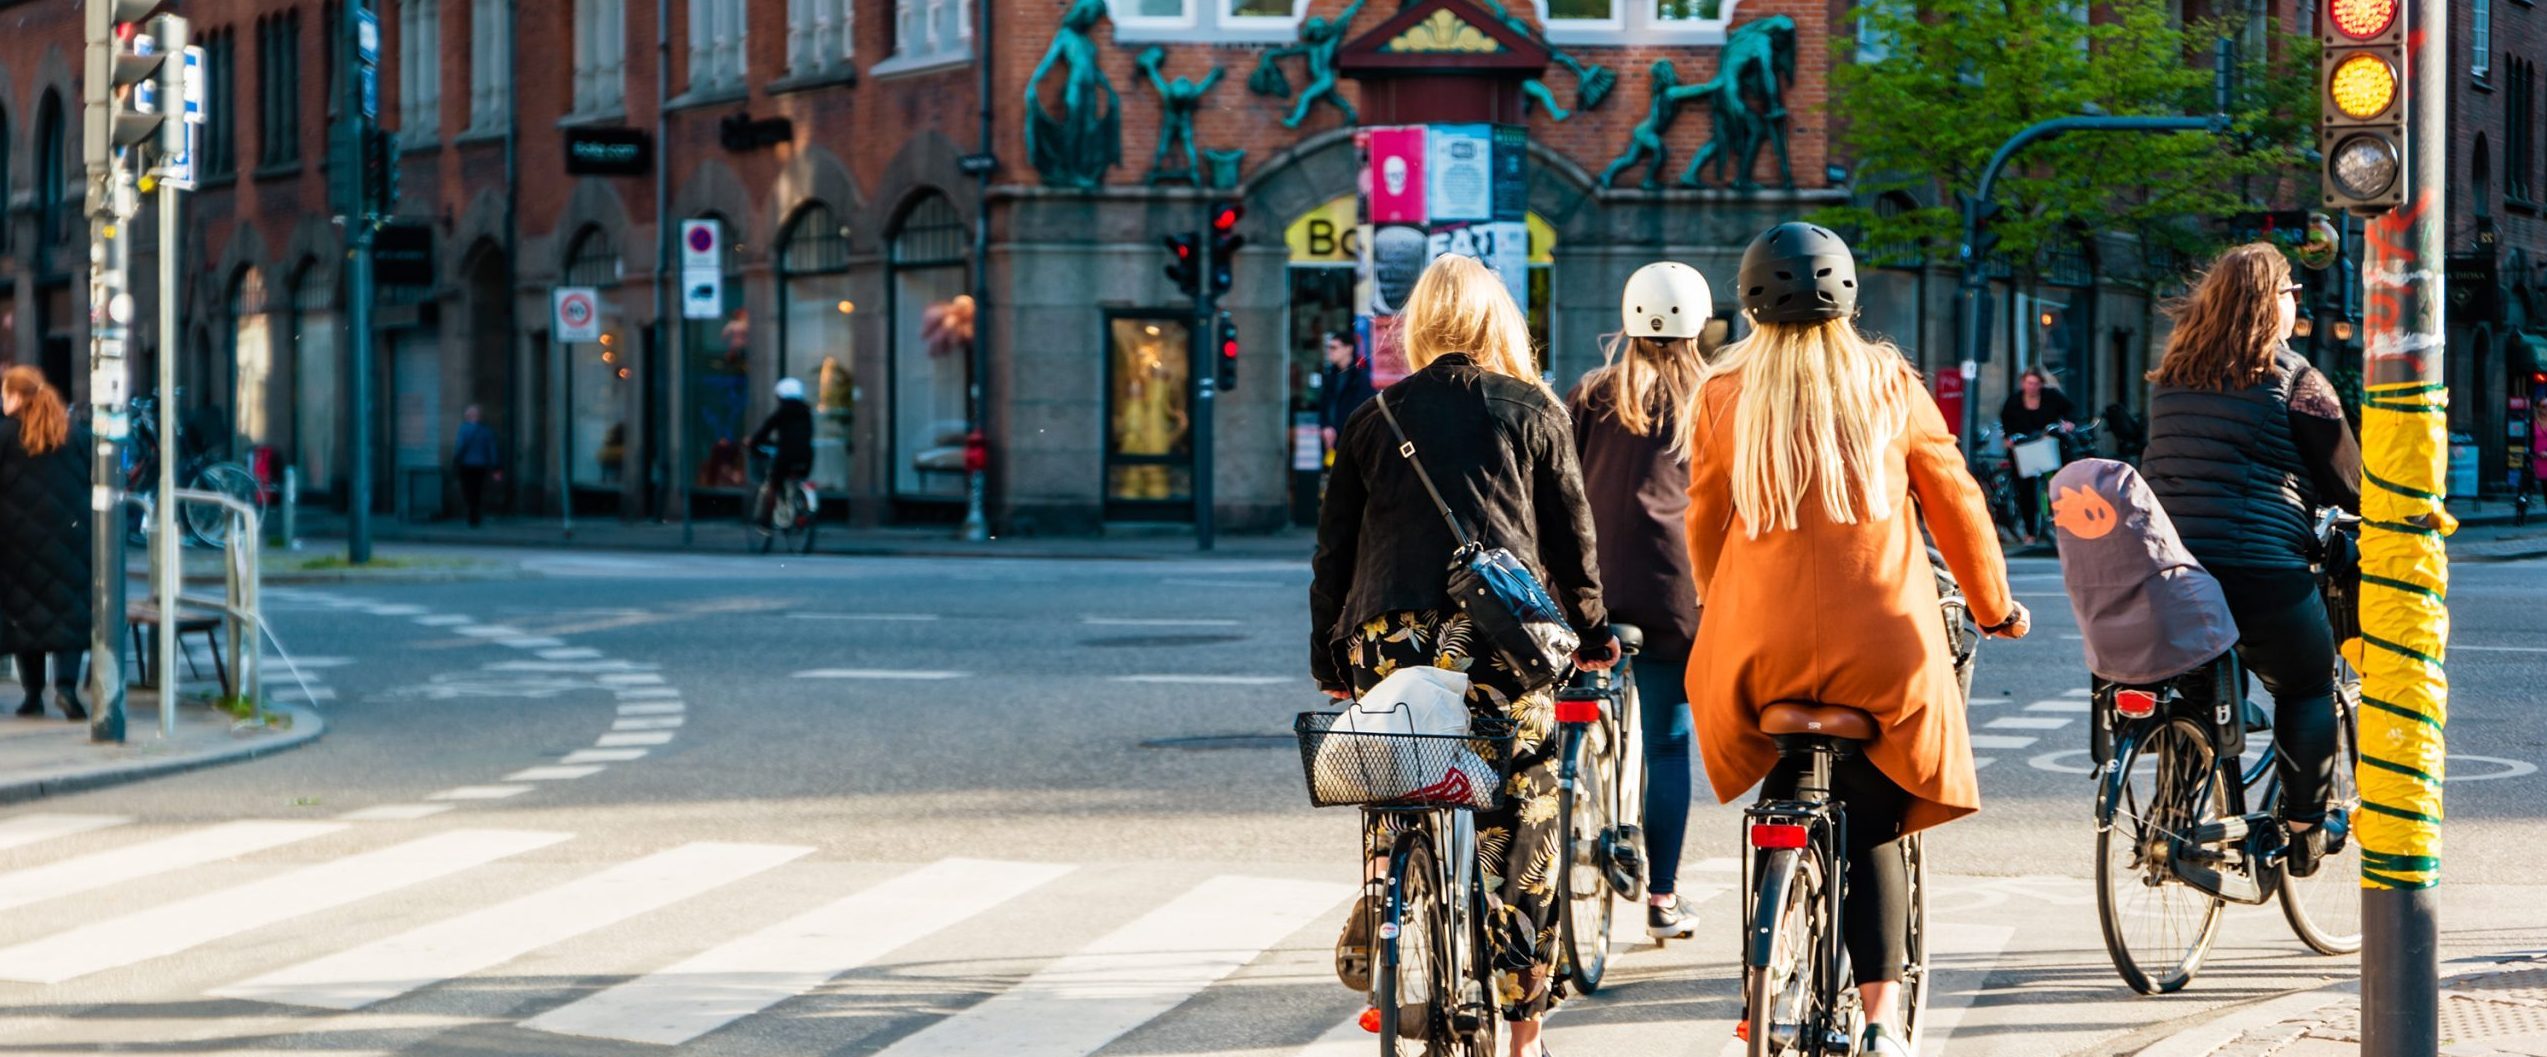 Street life in Copenhagen. People riding bikes in the city center.